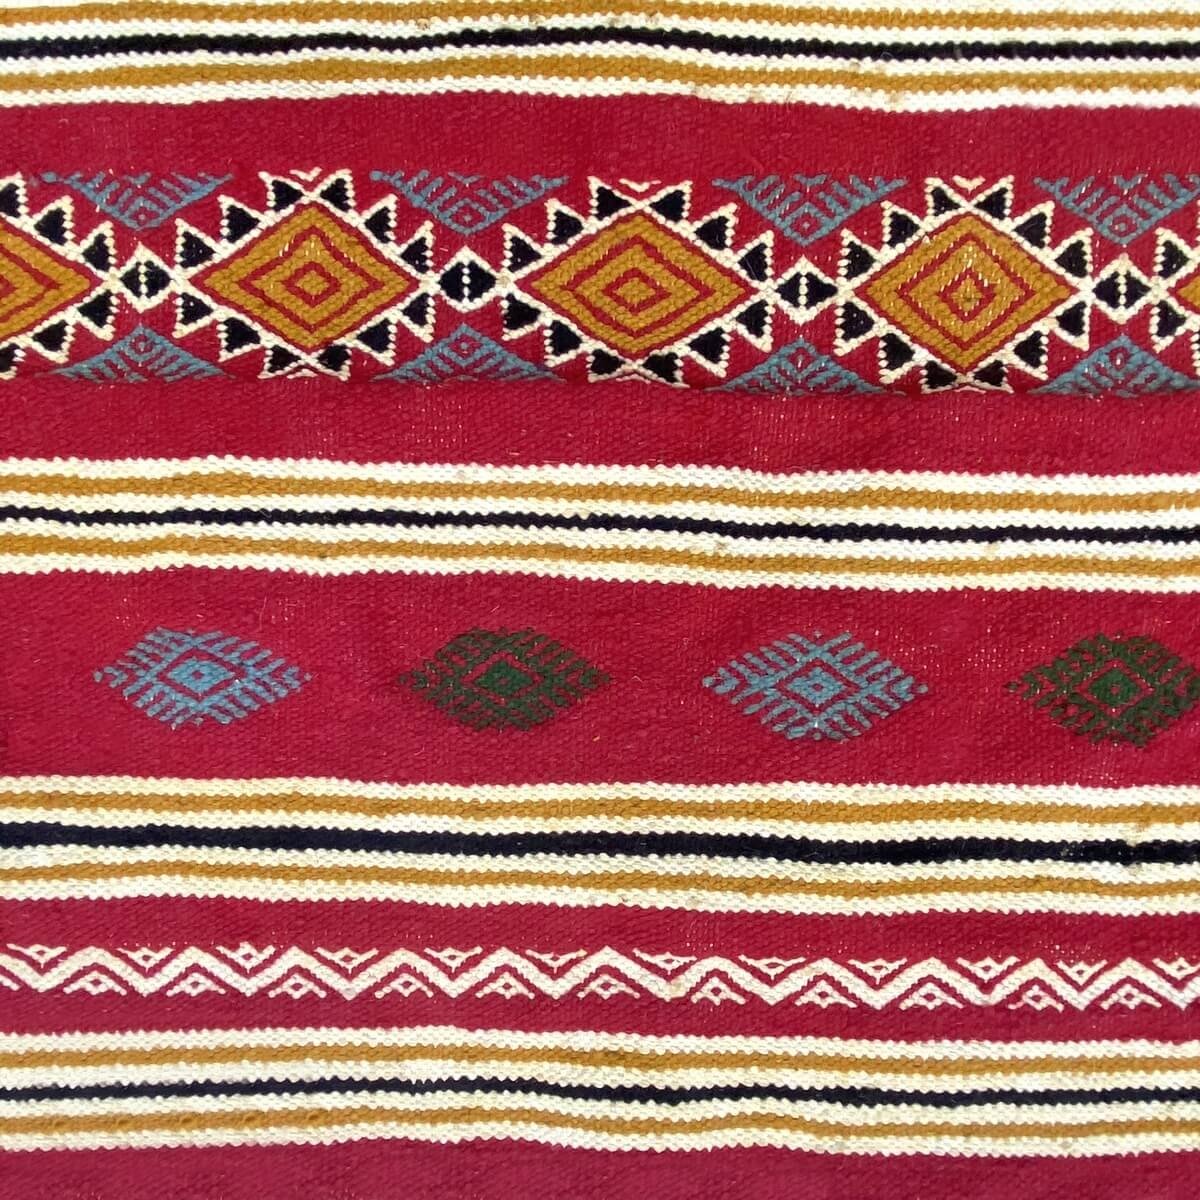 Berber tapijt Tapijt Kilim Ifta 116x205 Rood/Oranje (Handgeweven, Wol, Tunesië) Tunesisch kilimdeken, Marokkaanse stijl. Rechtho